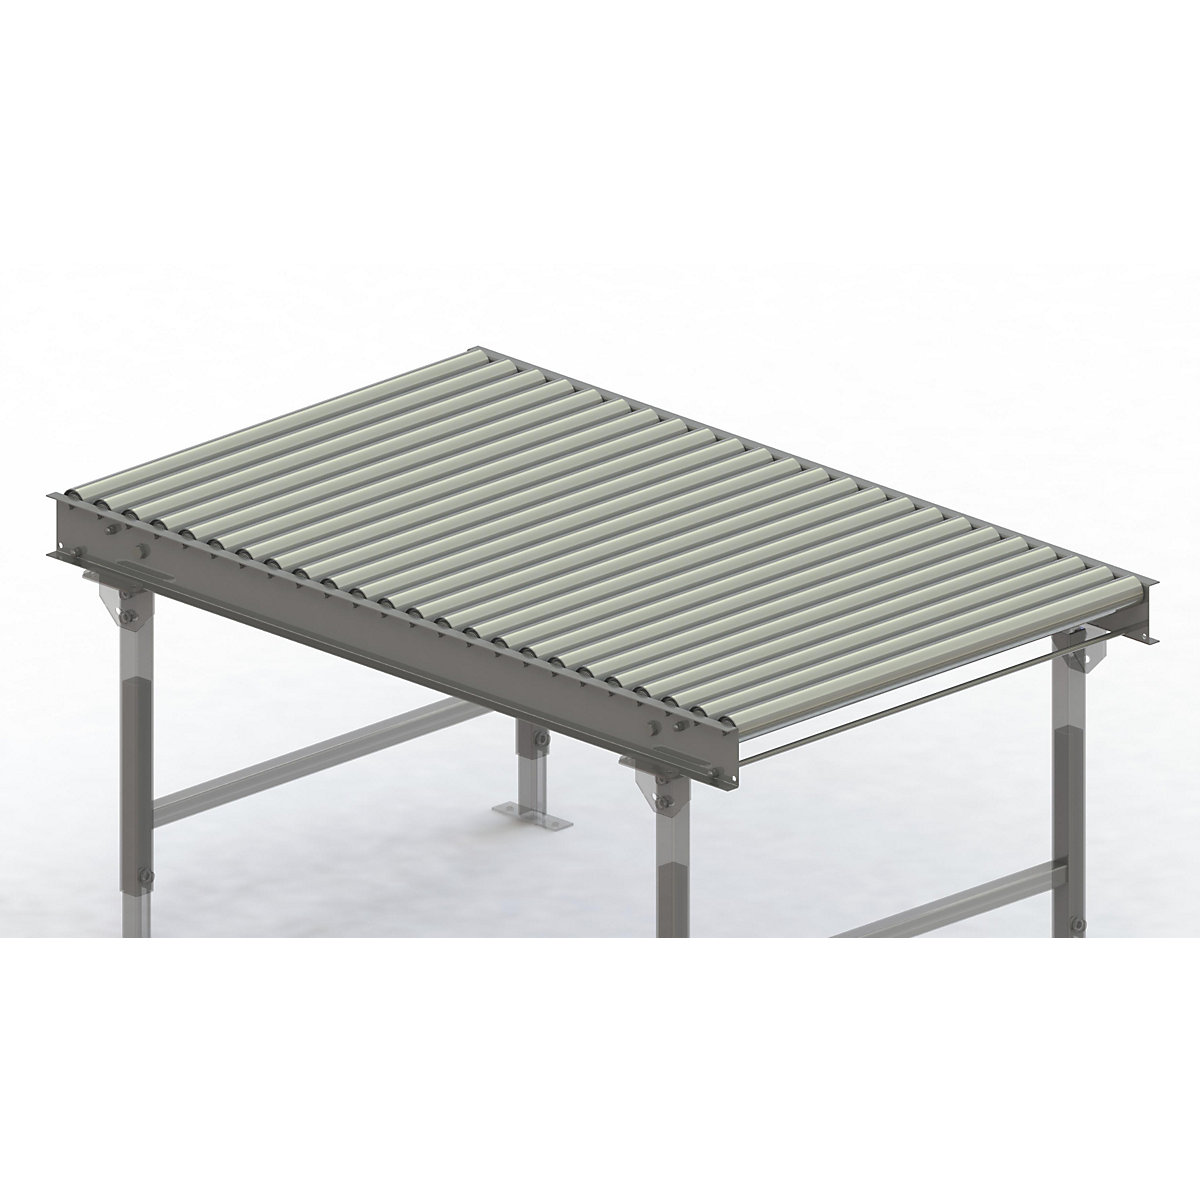 Roller conveyor, steel frame with zinc plated steel rollers – Gura, track width 900 mm, distance between axles 62.5 mm, length 1.5 m-7